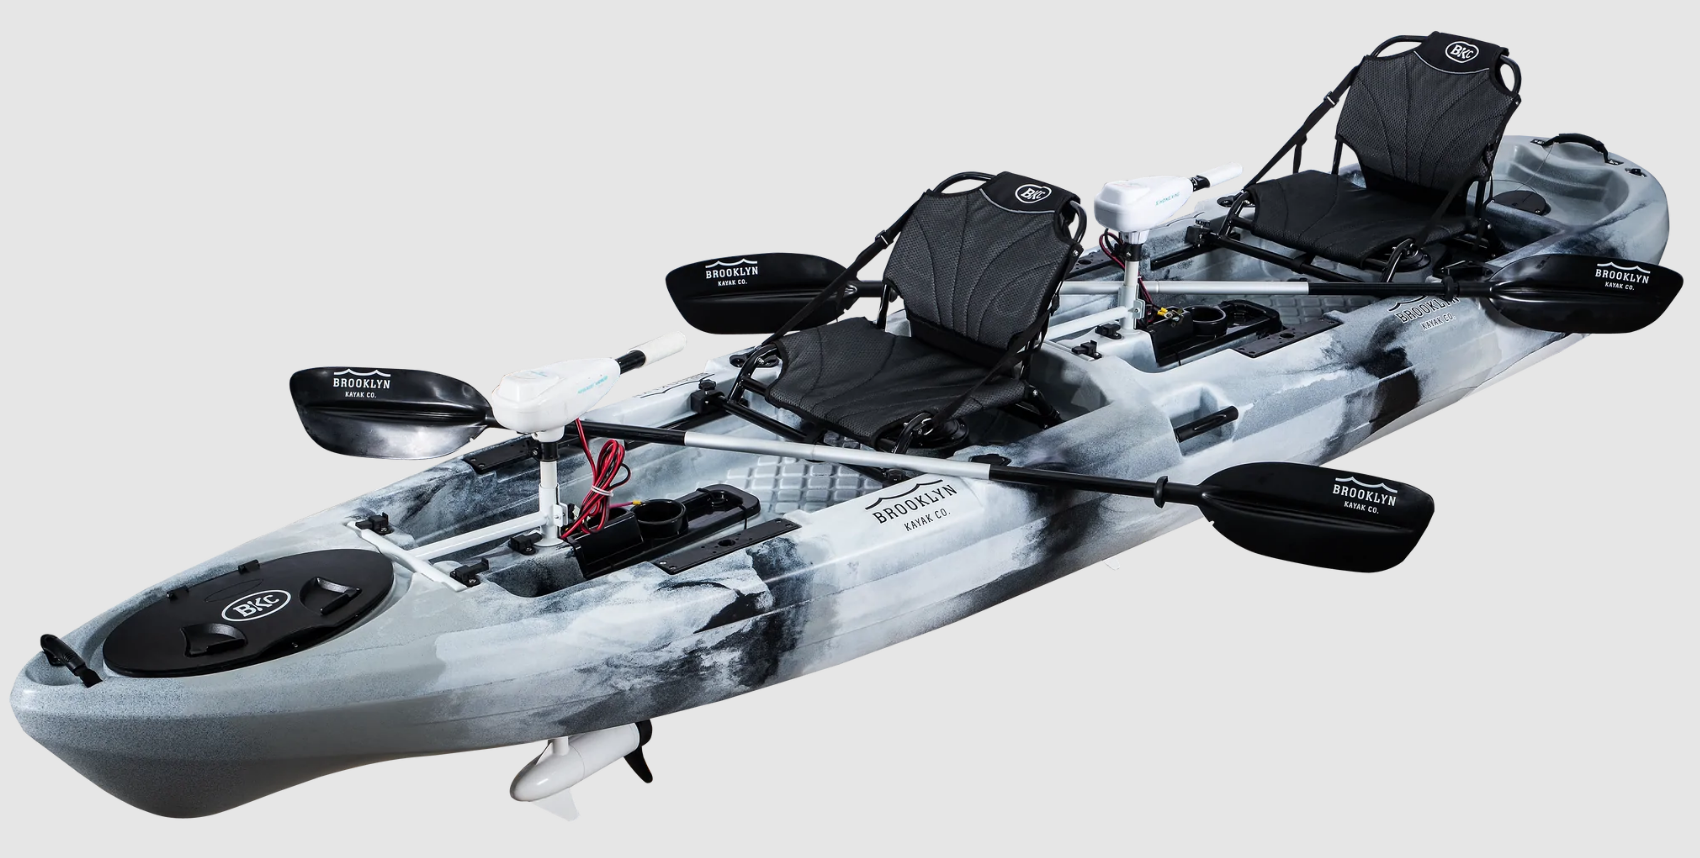 BKC - PK14 Angler 14-foot Sit On Top Tandem Pedal Fishing Kayak w